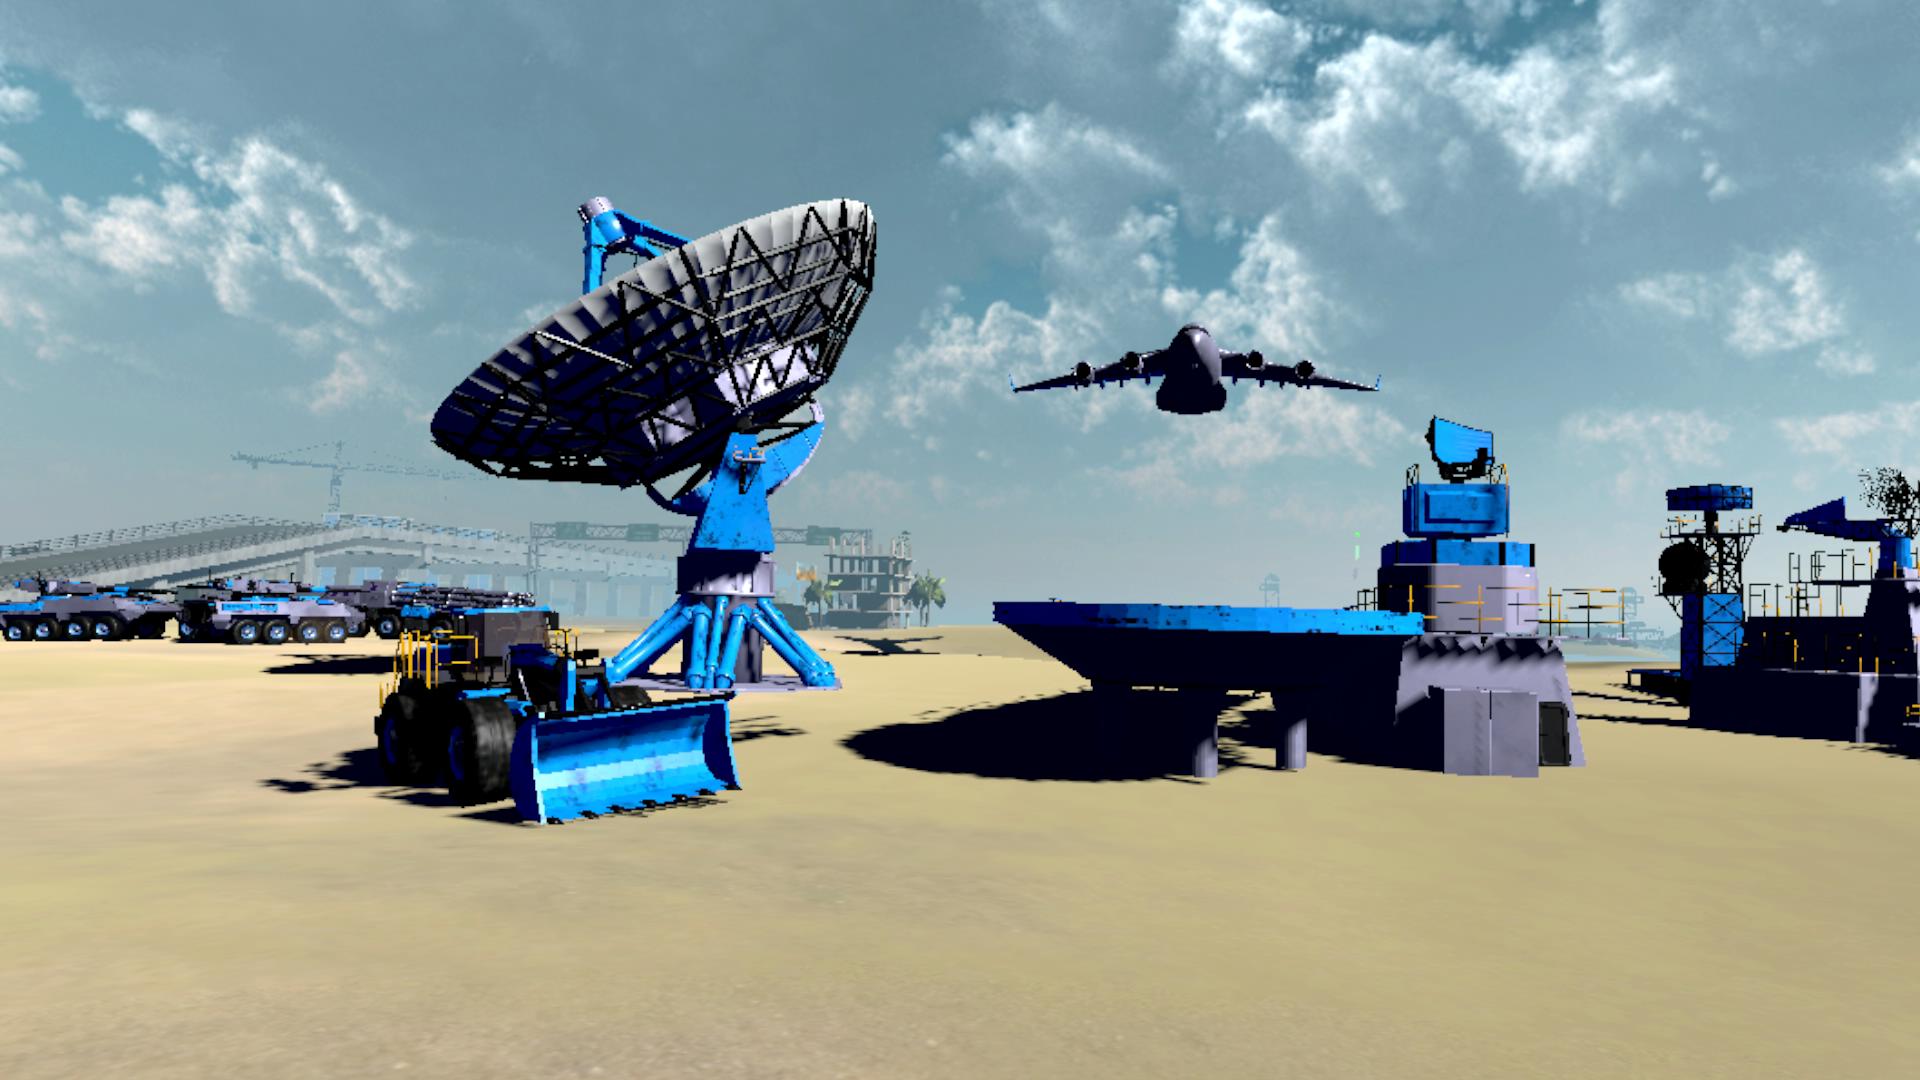 Armor Clash II - VR Featured Screenshot #1